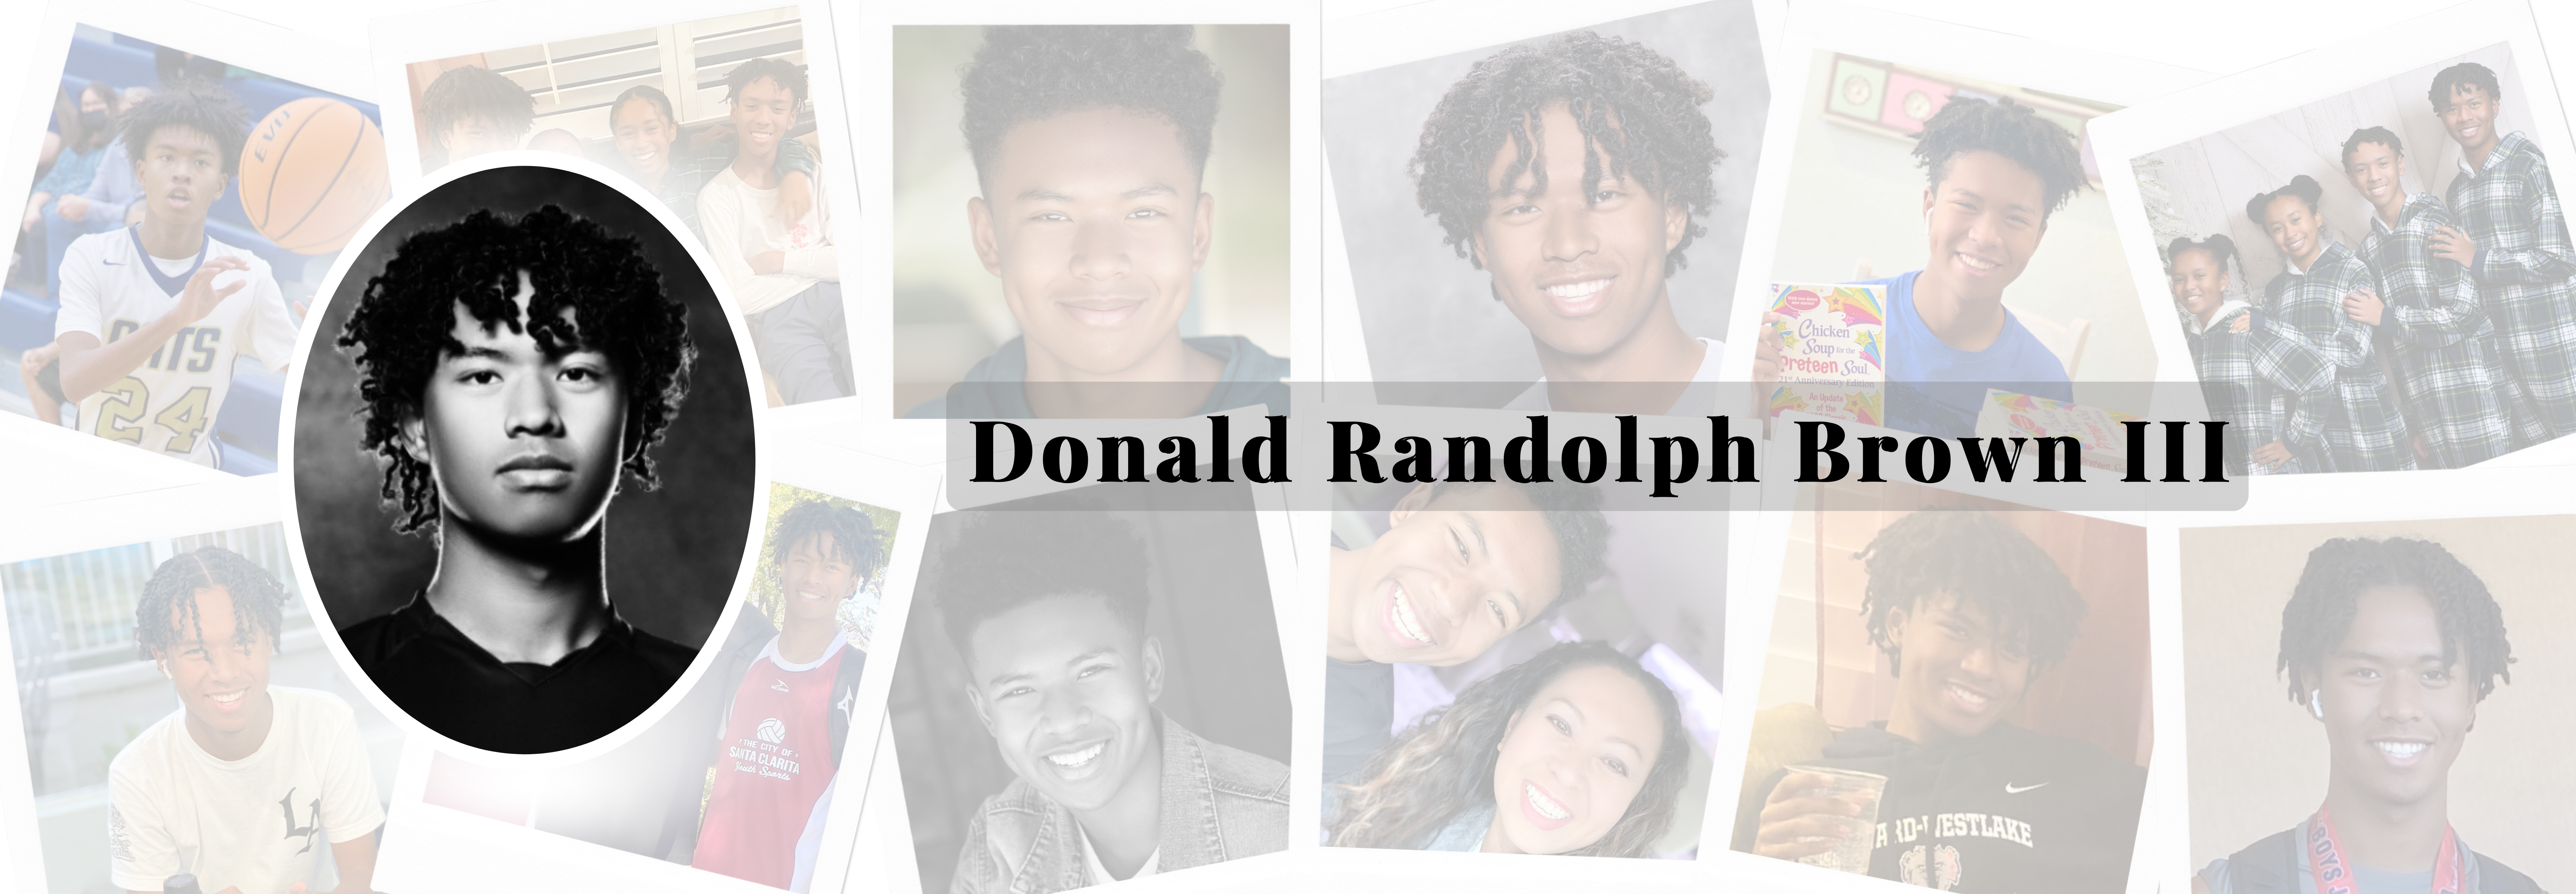 Donald Randolph Brown III